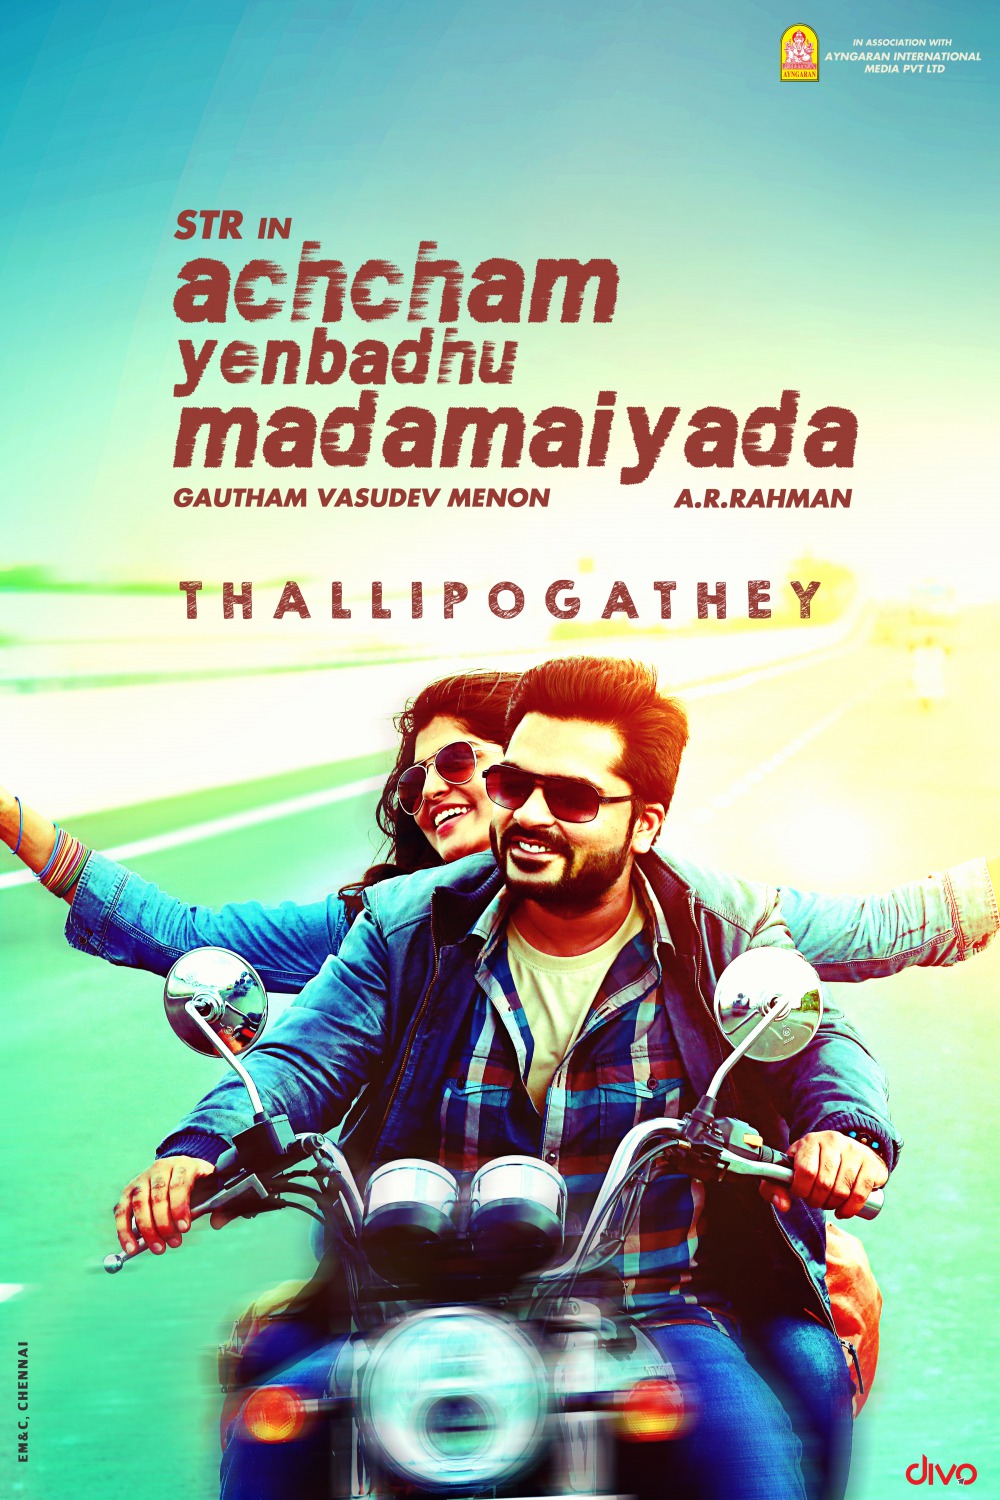 Extra Large Movie Poster Image for Achcham Yenbadhu Madamaiyada (#1 of 3)